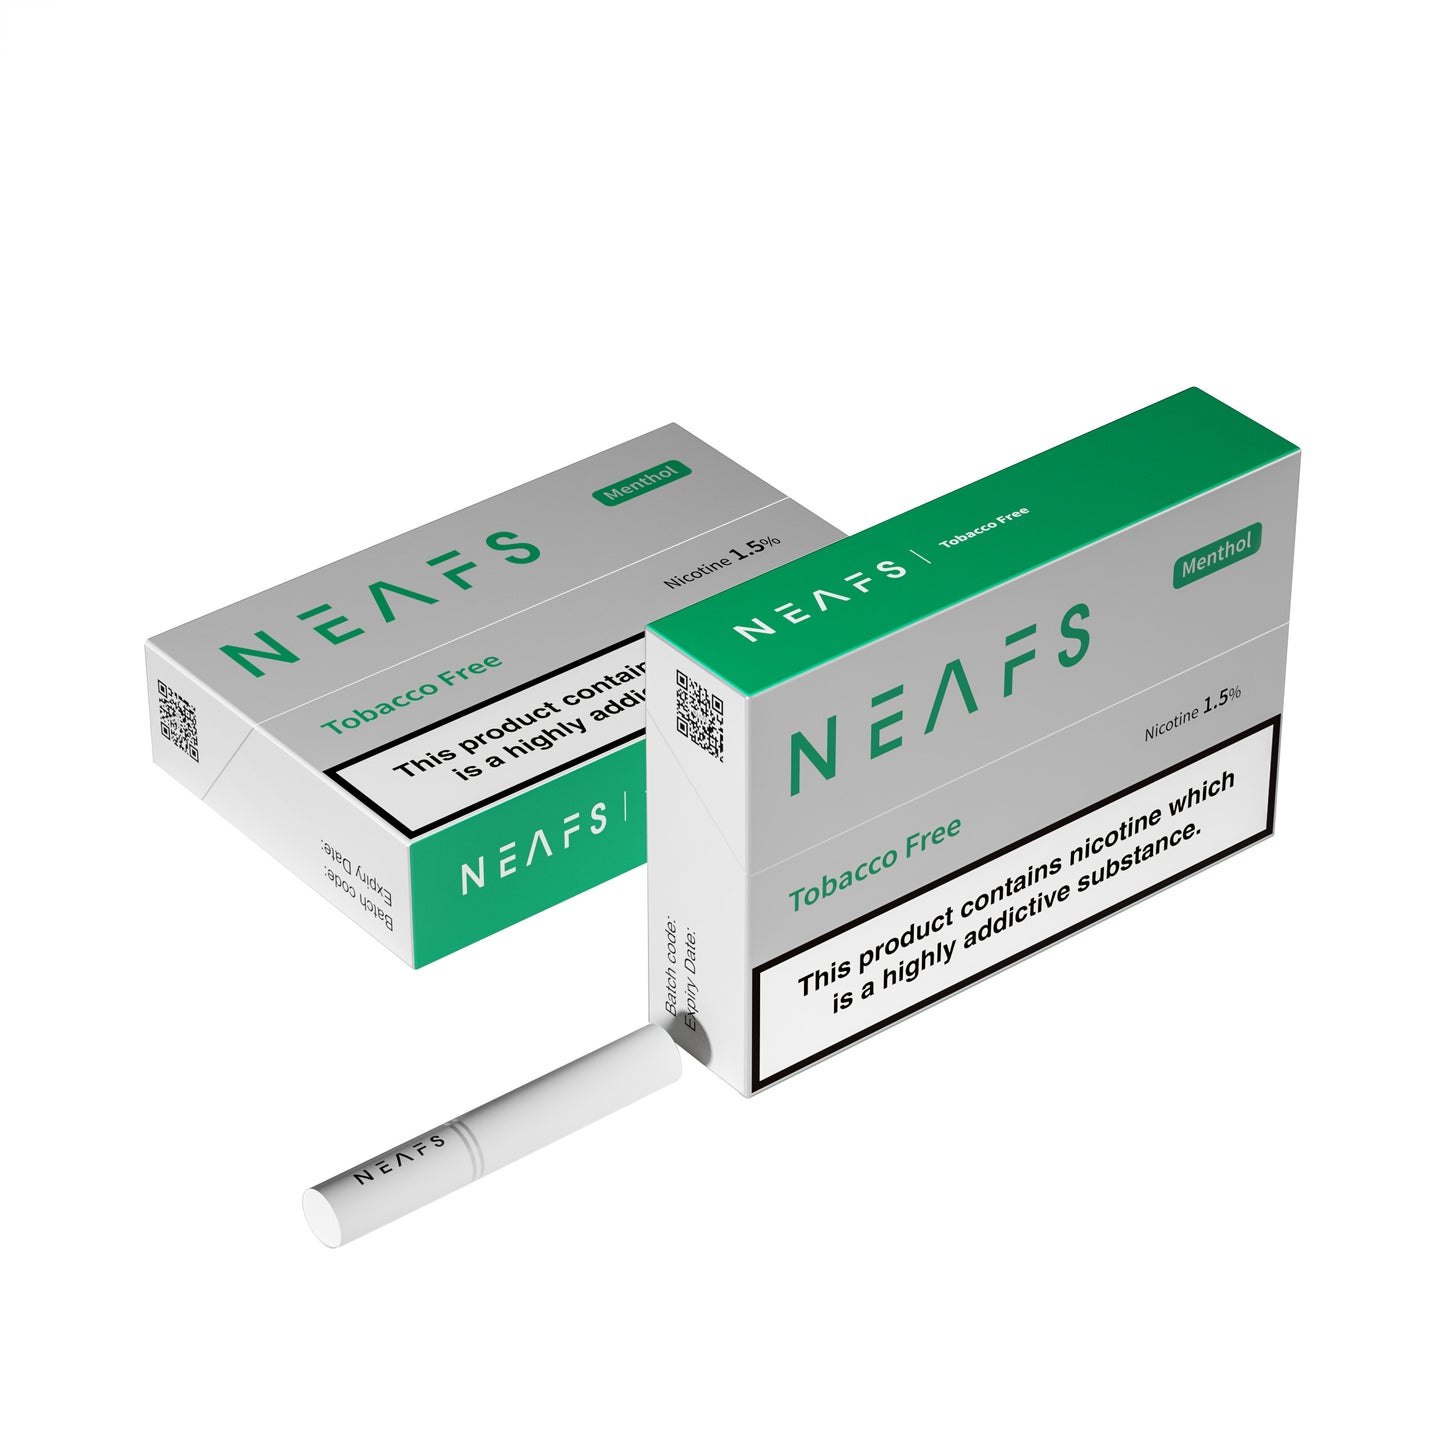 NEAFS Menthol Tobacco Free Heated Sticks